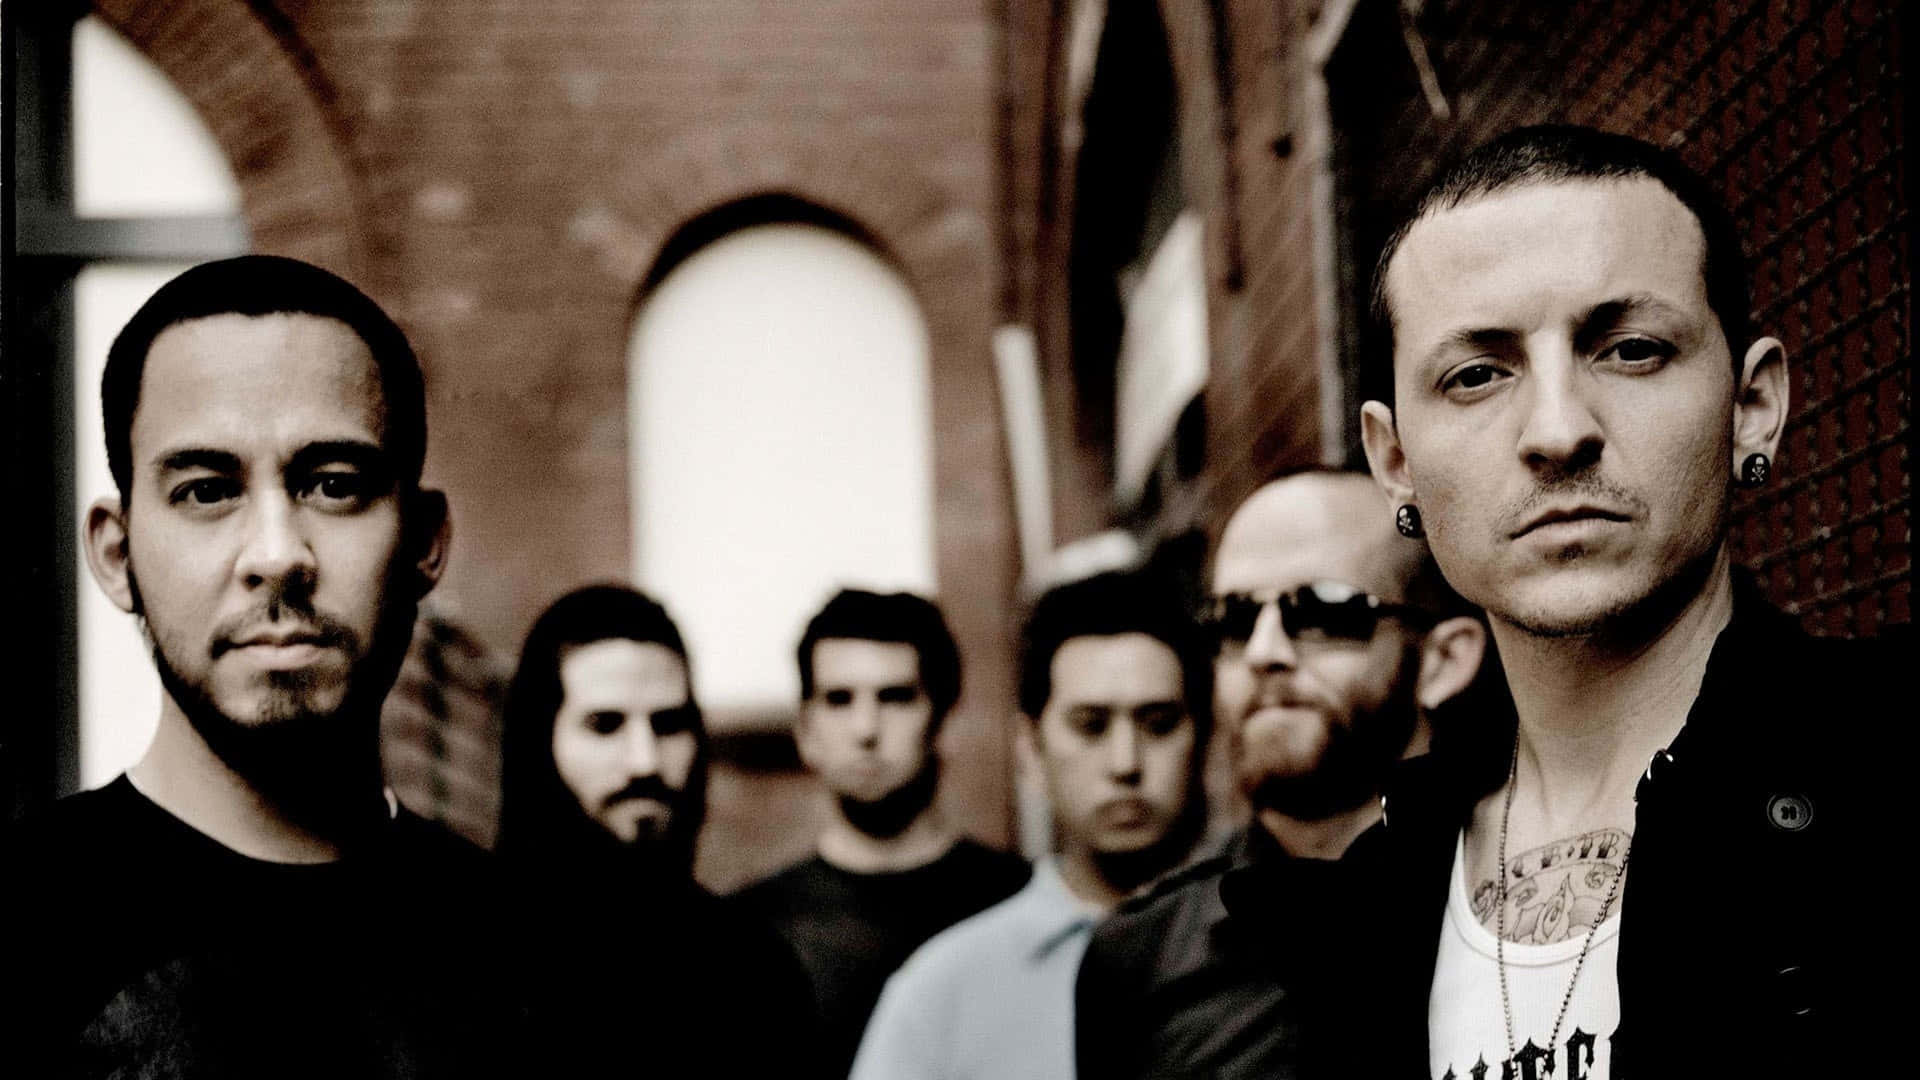 Dieikonische Alternative-rock-band Linkin Park Wallpaper